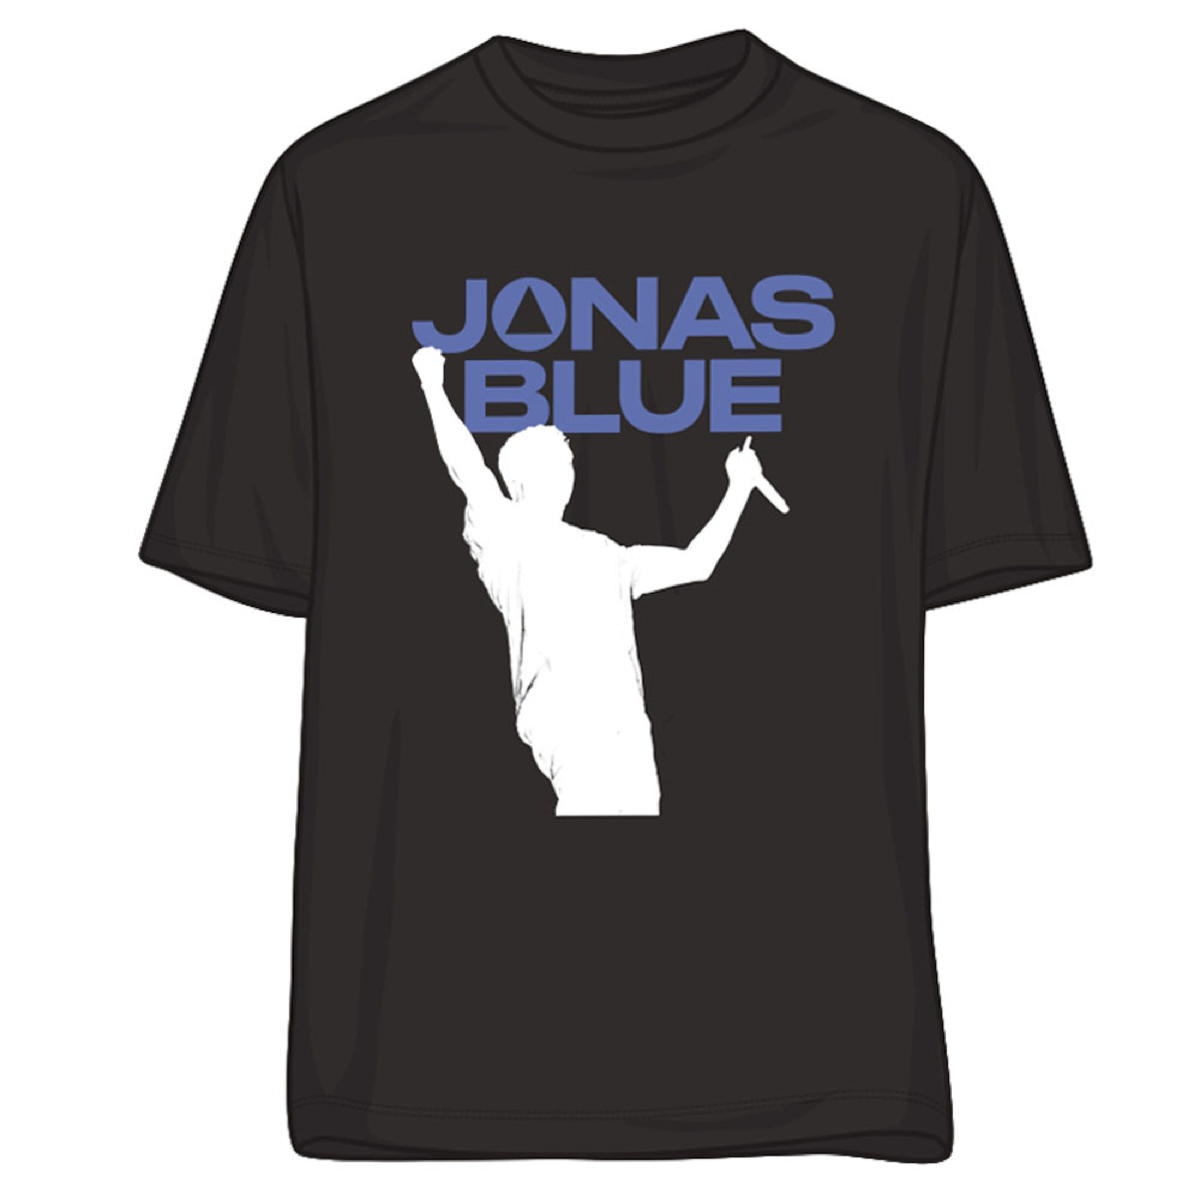 JONAS BLUE Tシャツ